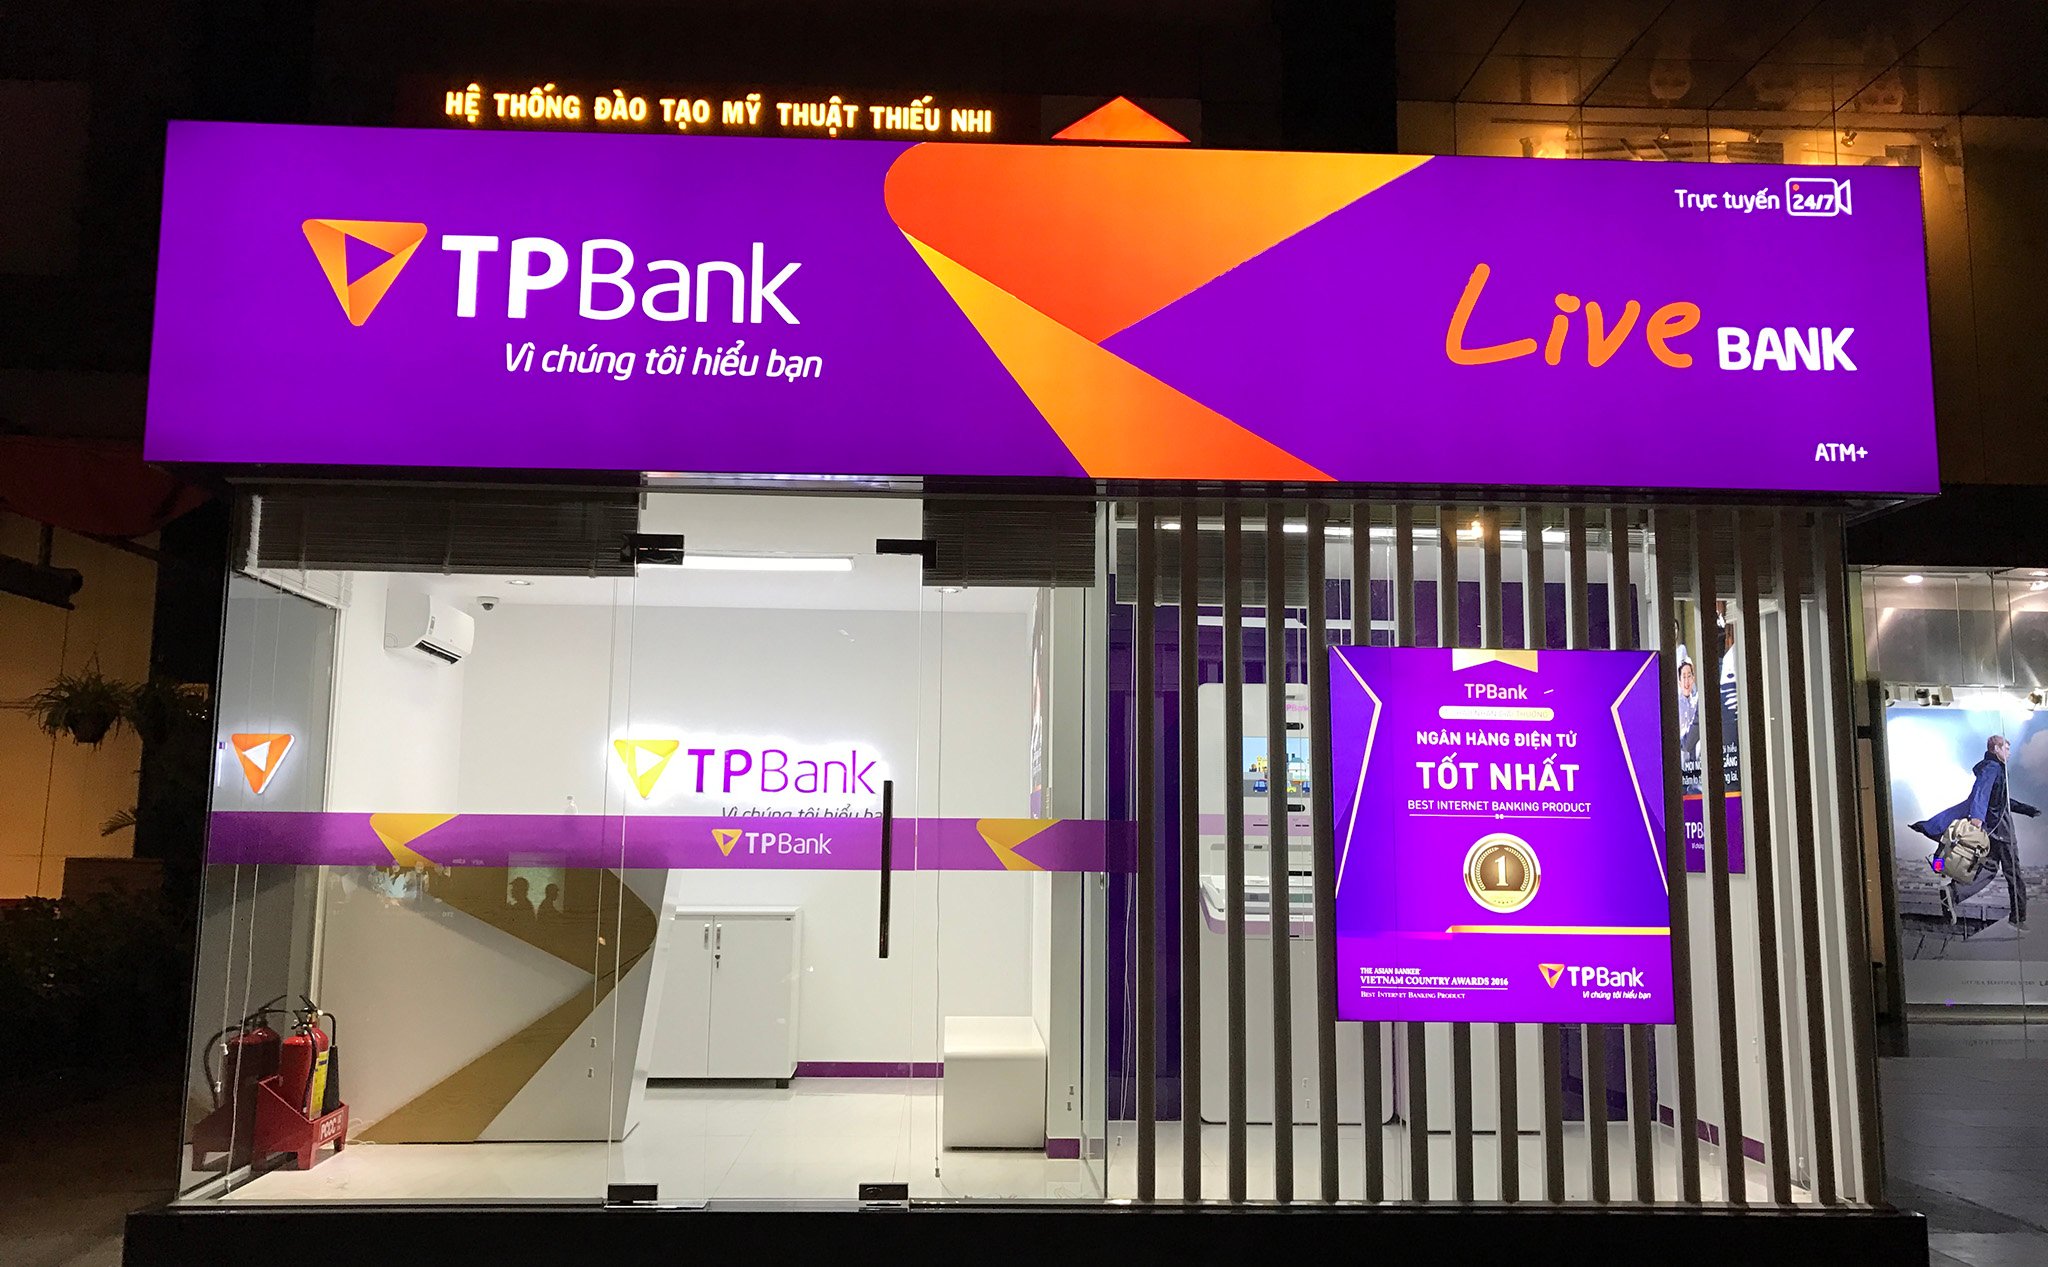 Live-bank-Tpbank